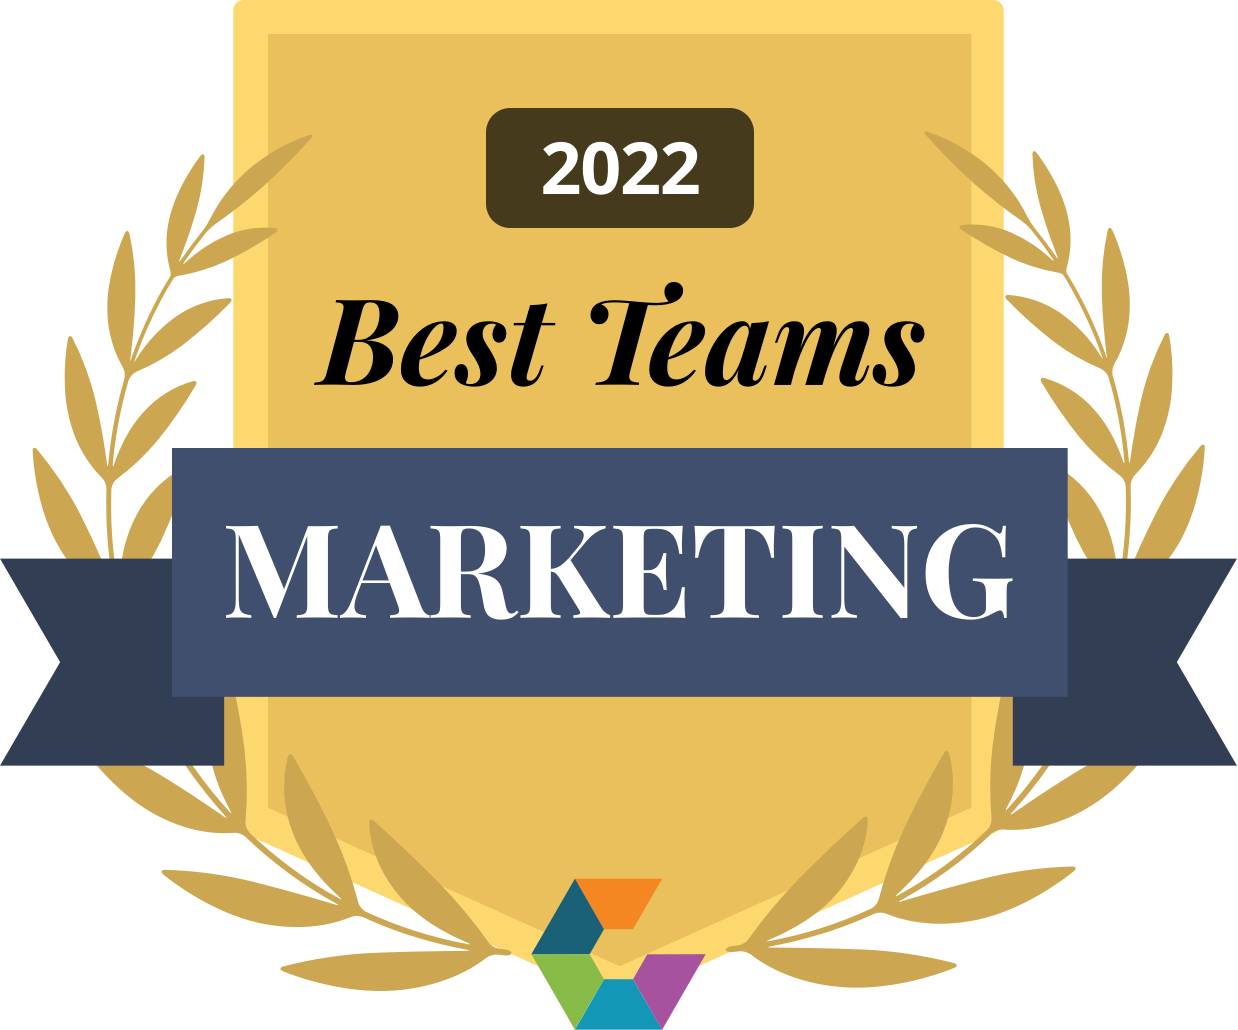 Best Marketing Teams of 2022 award